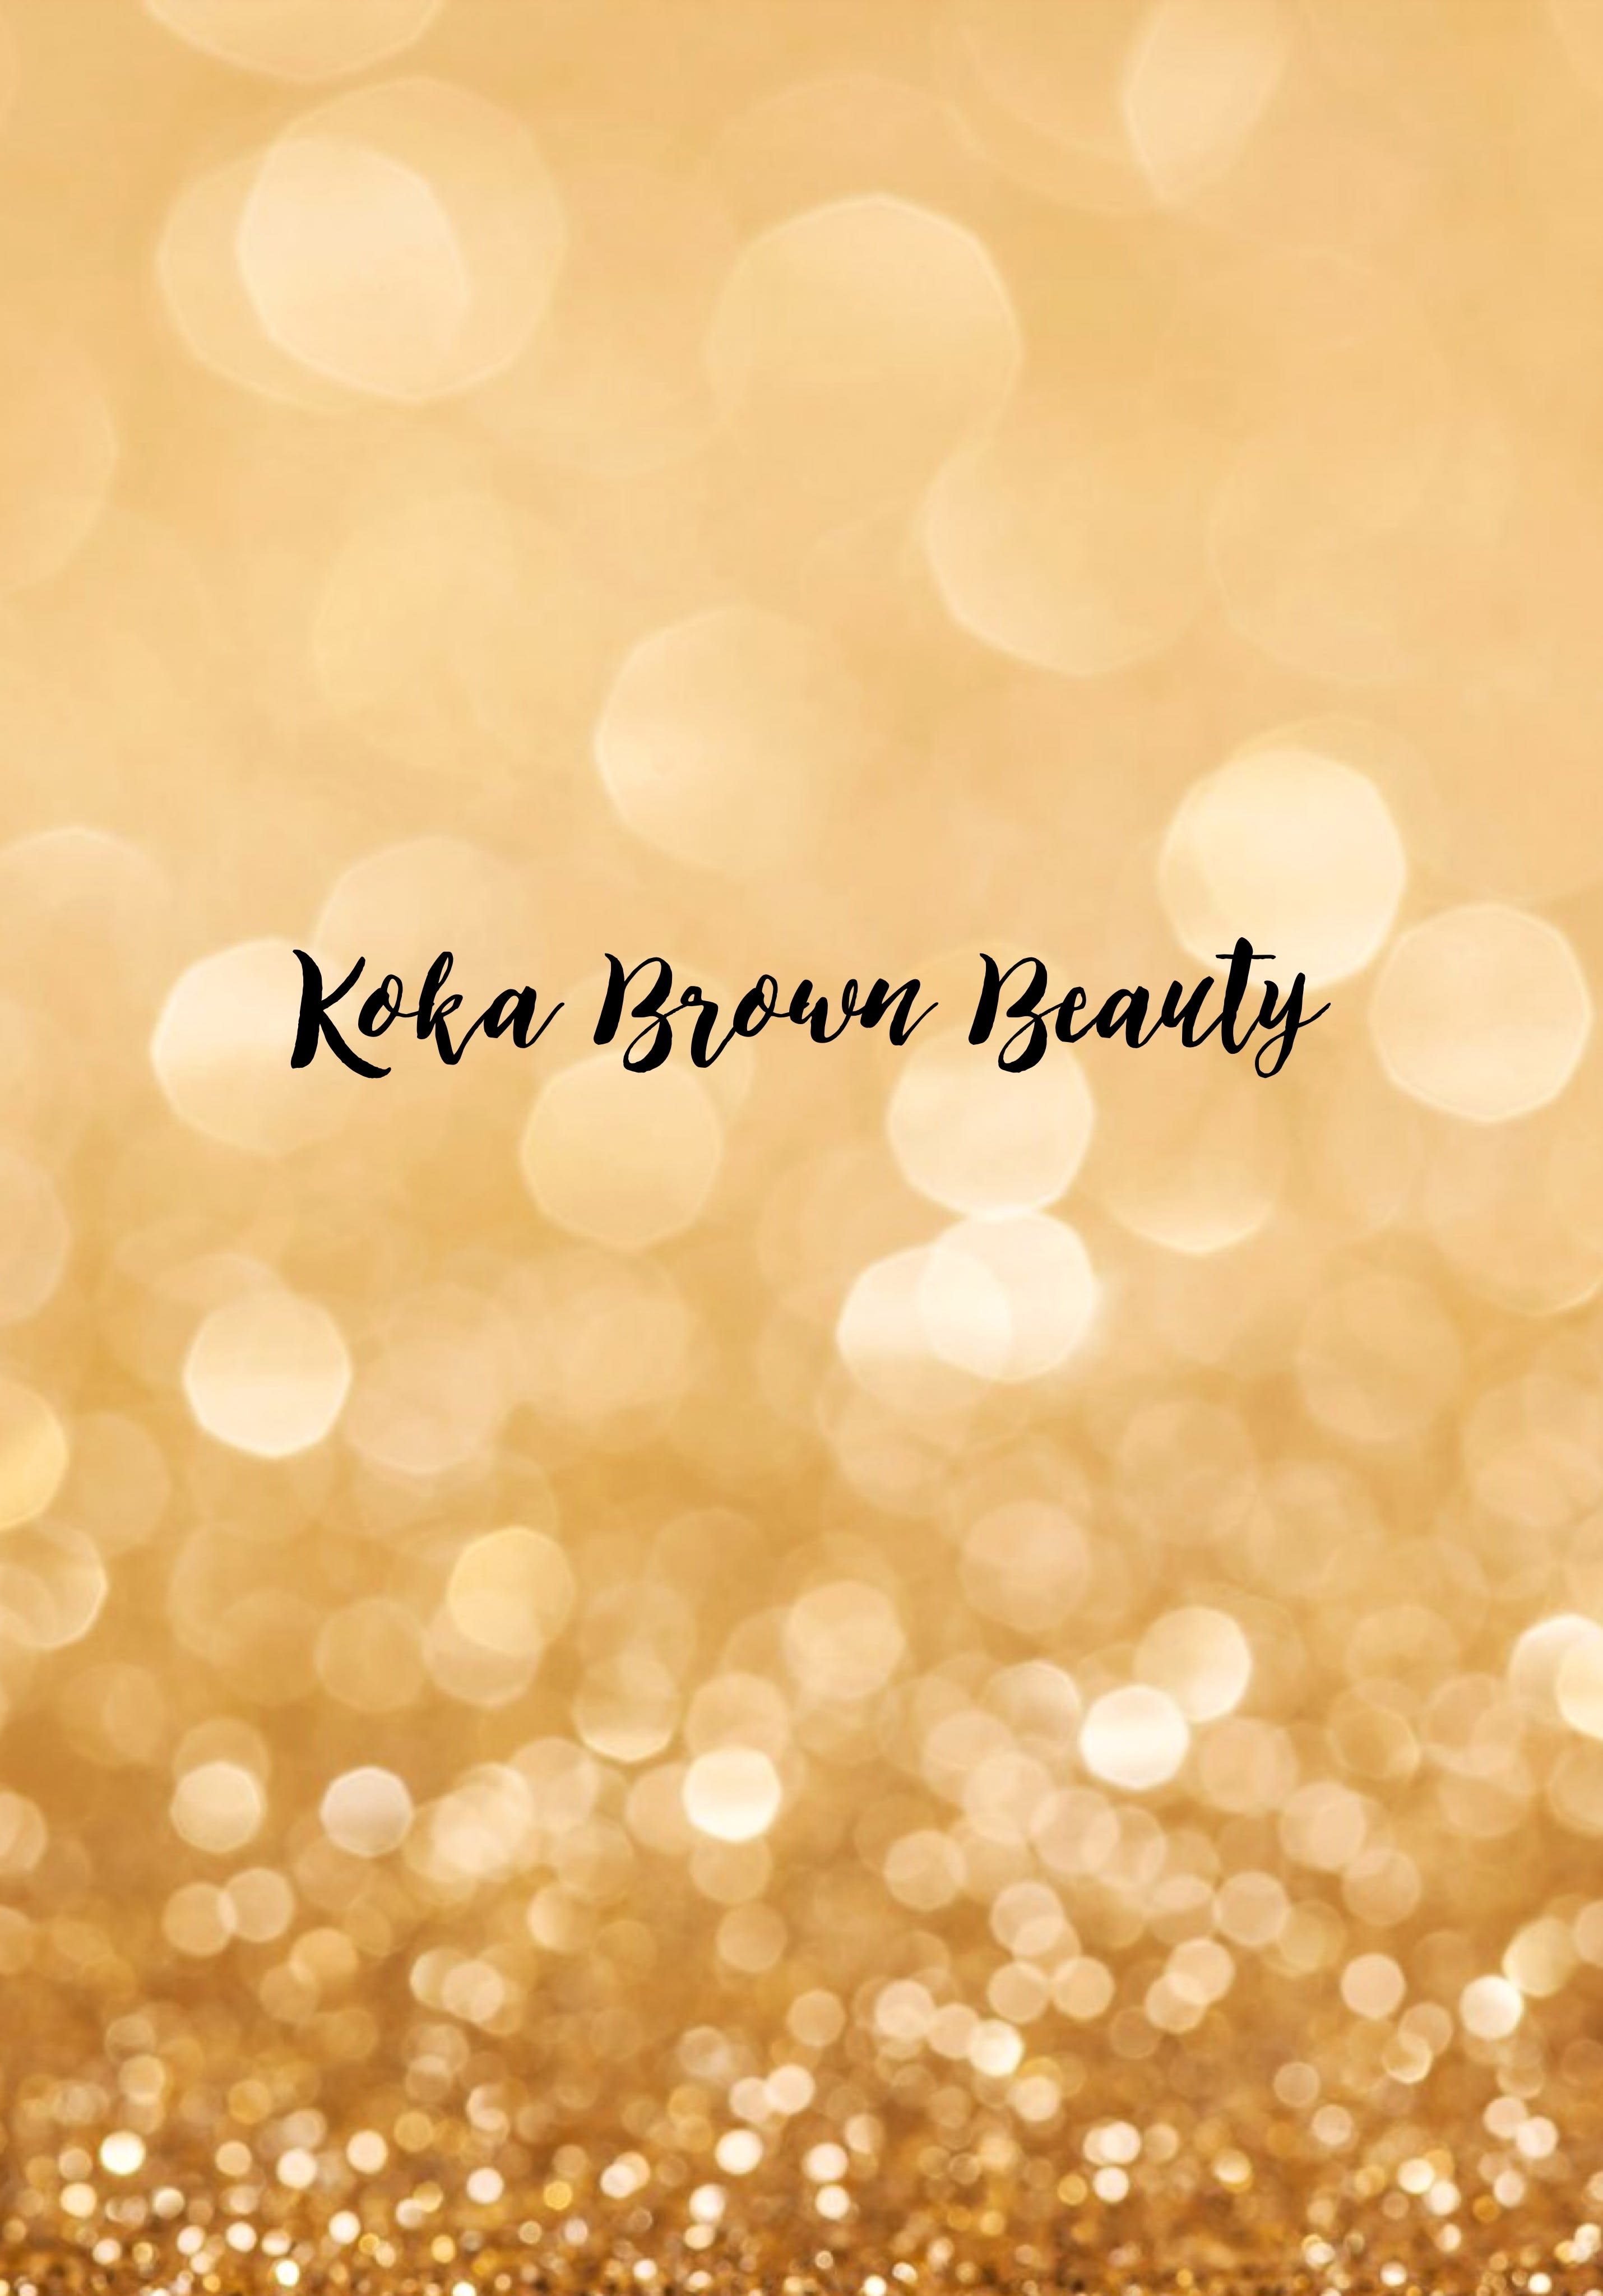 Koka Brown Beauty